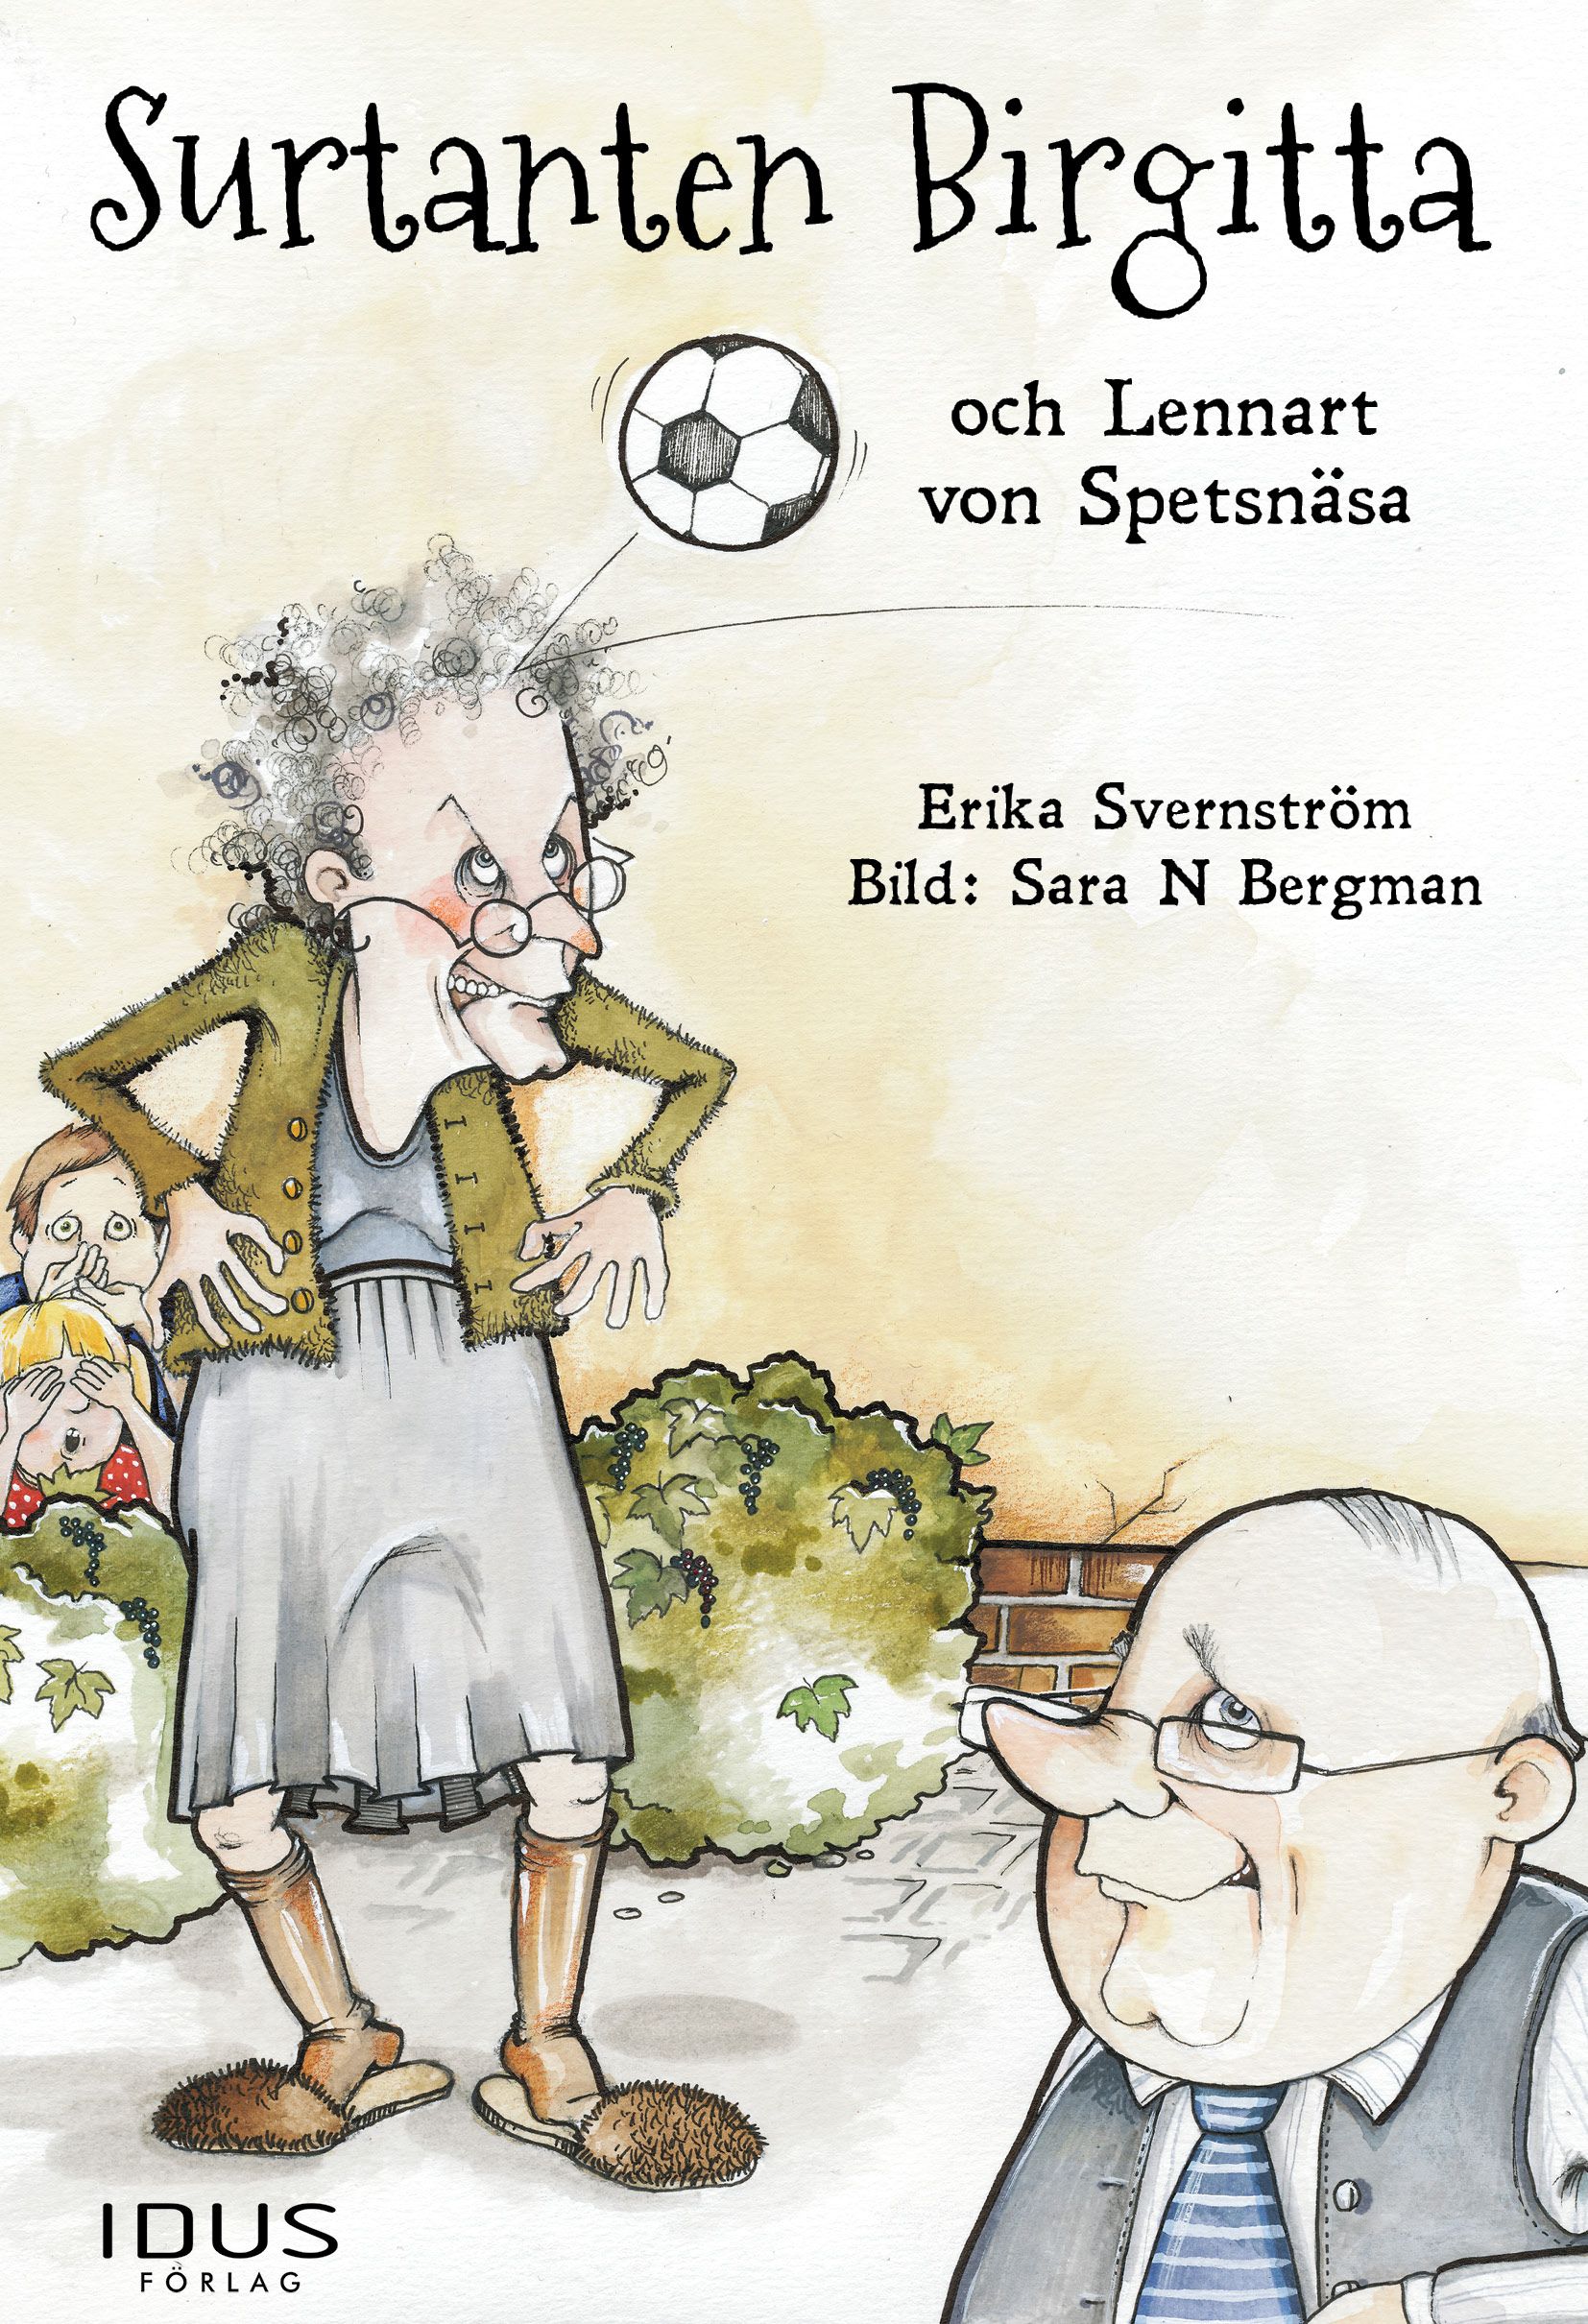 Surtanten Birgitta och Lennart von Spetsnäsa, e-bog af Erika Svernström